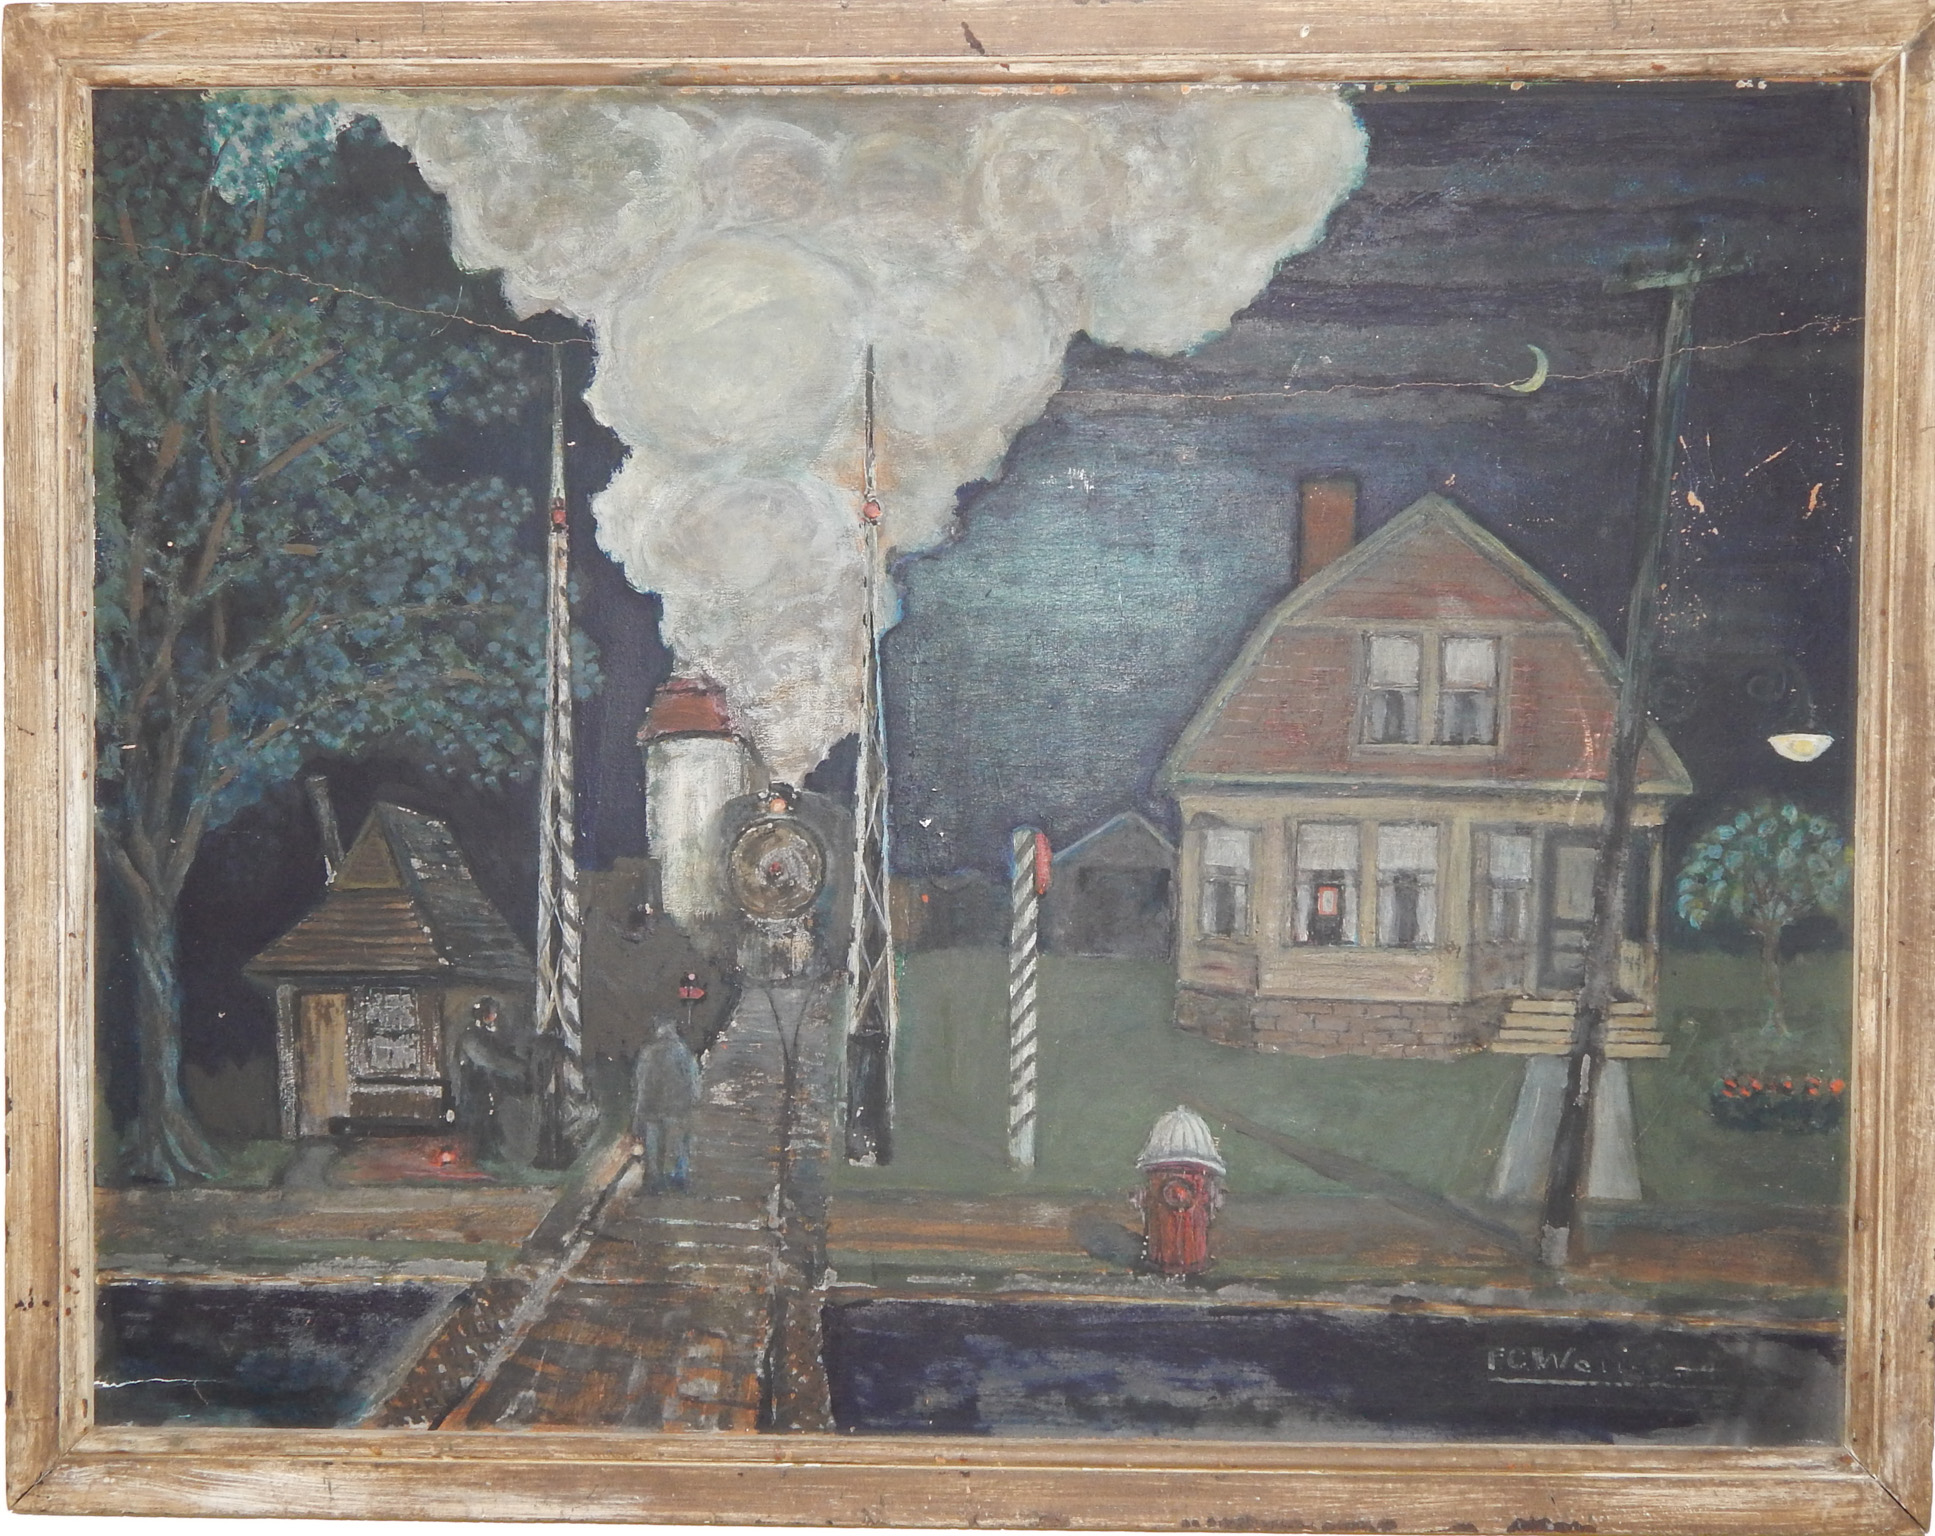 Railroad crossing (brightened). (Chris Horton collection.)